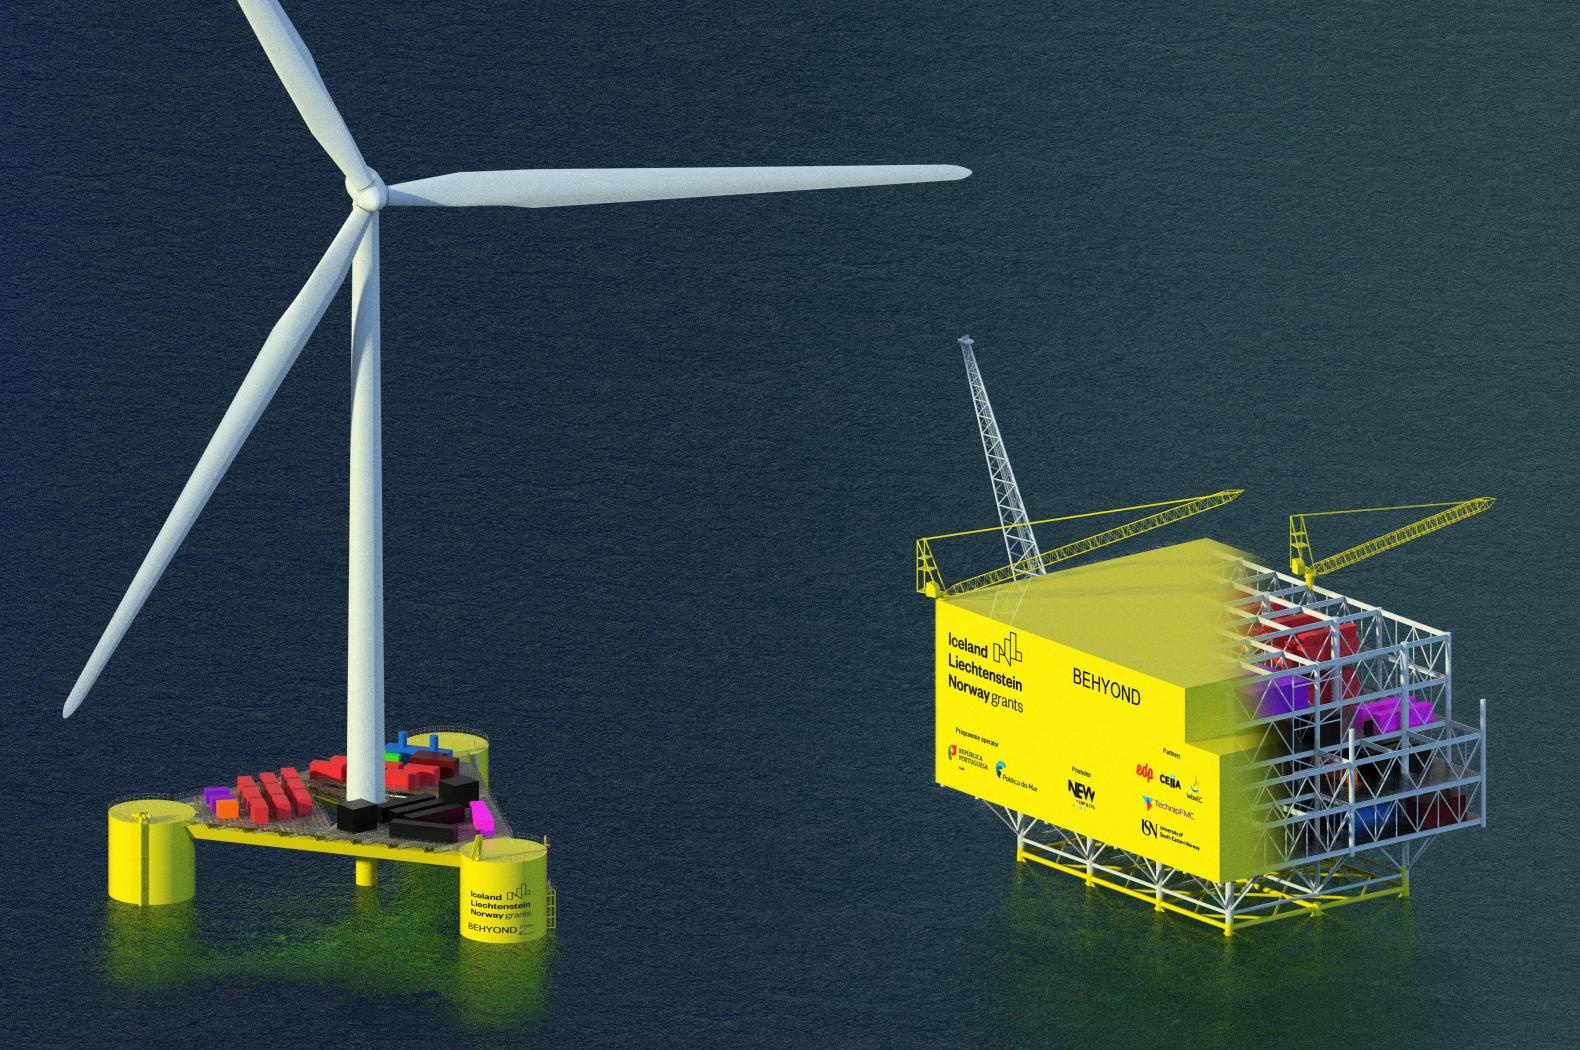 EDP - offshore wind energy - green hydrogen - high seas